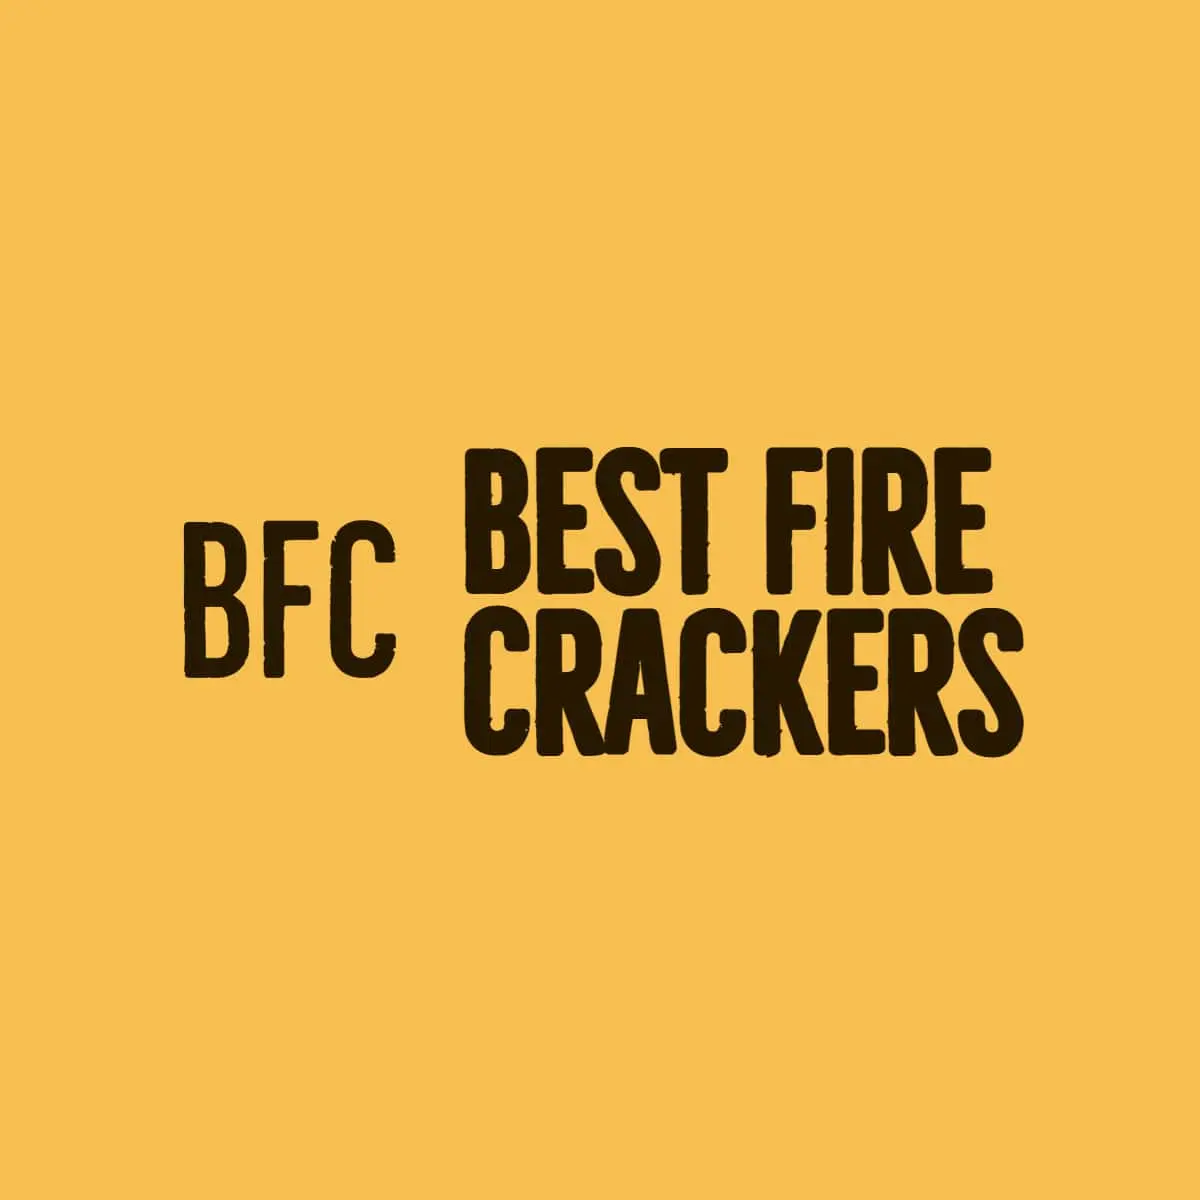 Best Fire Crackers